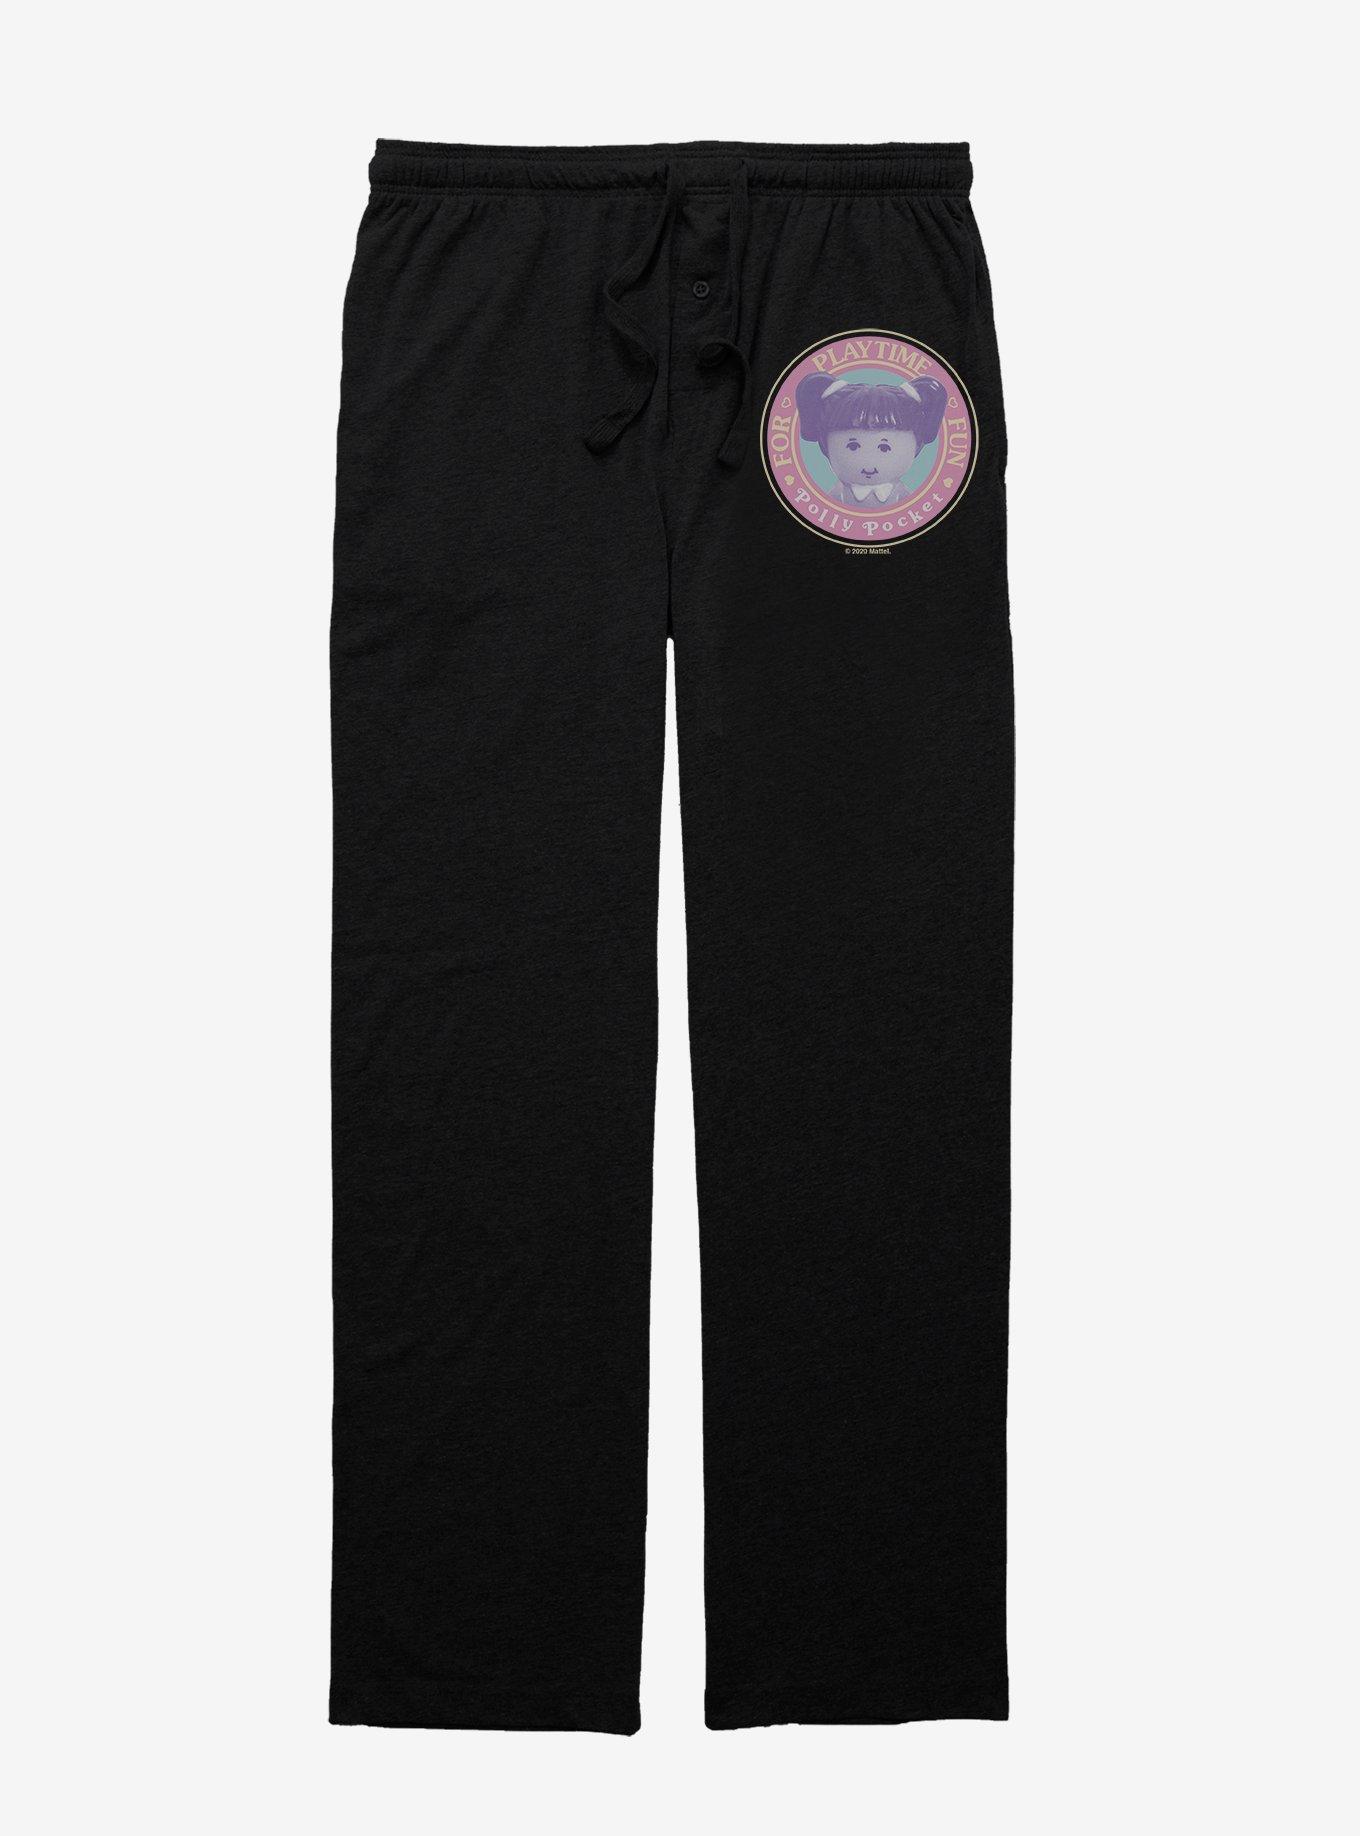 Polly Pocket Playtime Pajama Pants, BLACK, hi-res